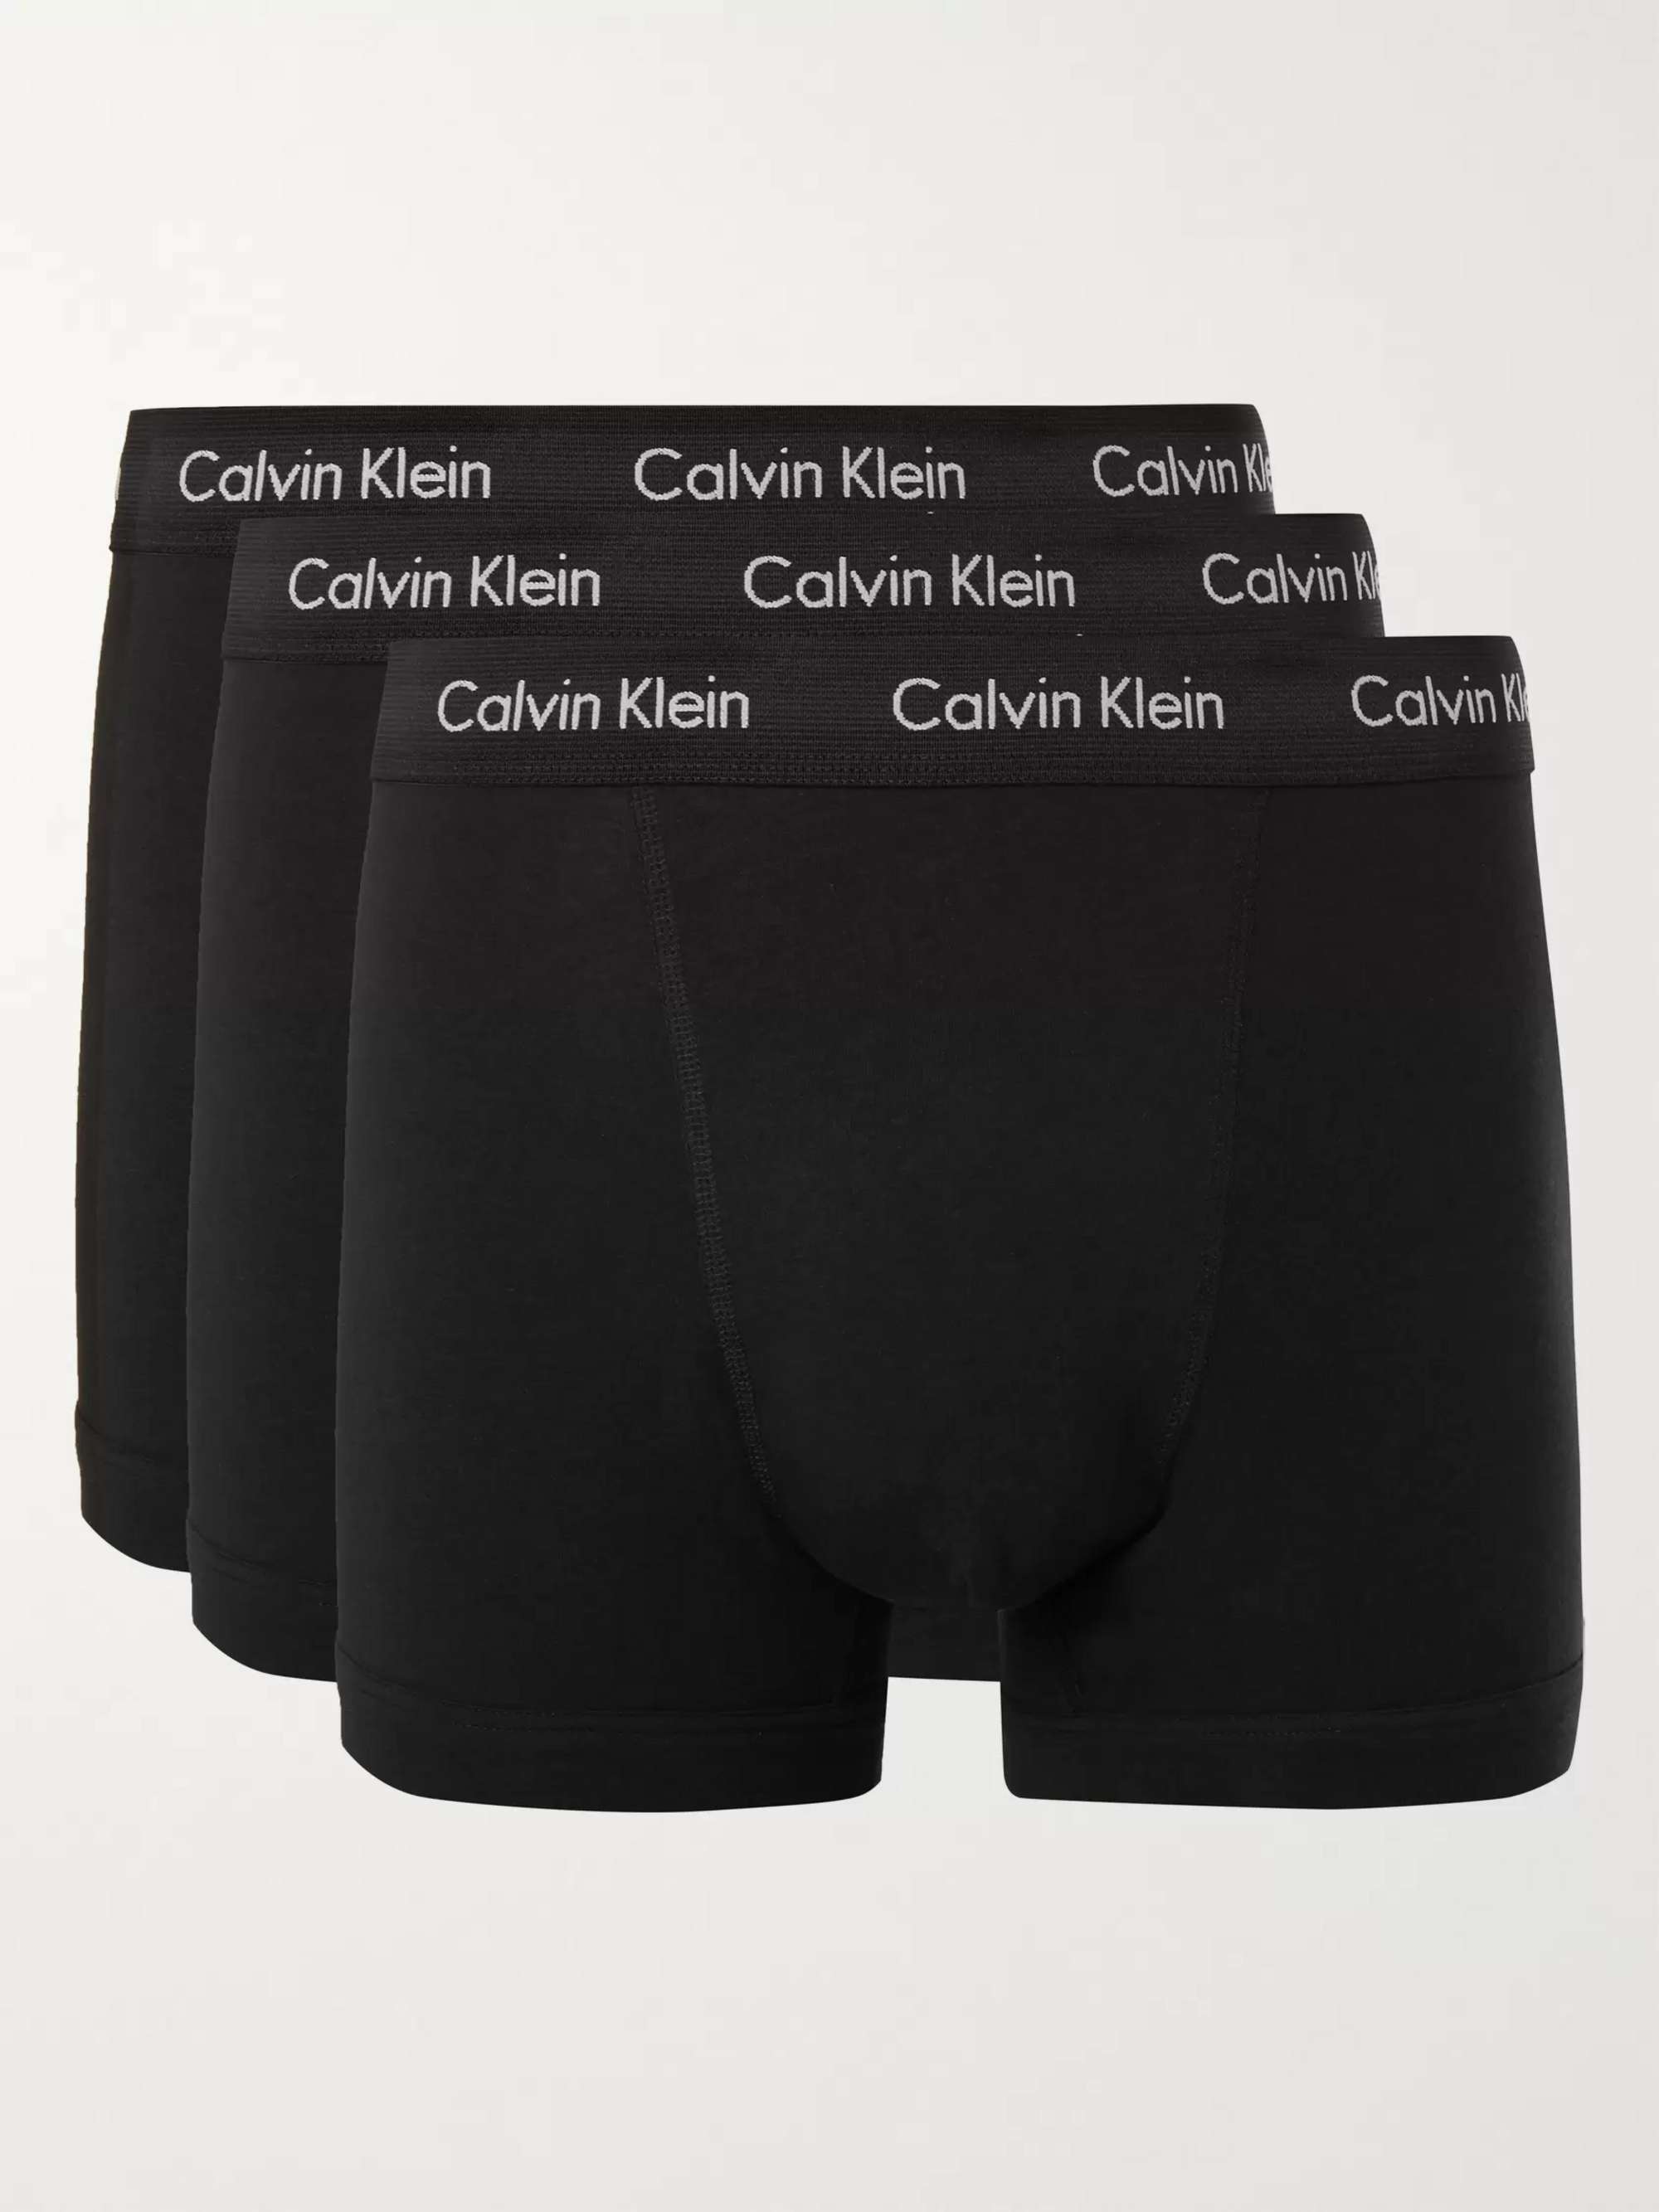 CALVIN KLEIN | UNDERWEAR Stretch-Cotton Shorts MR for PORTER Boxer Men Two-Pack